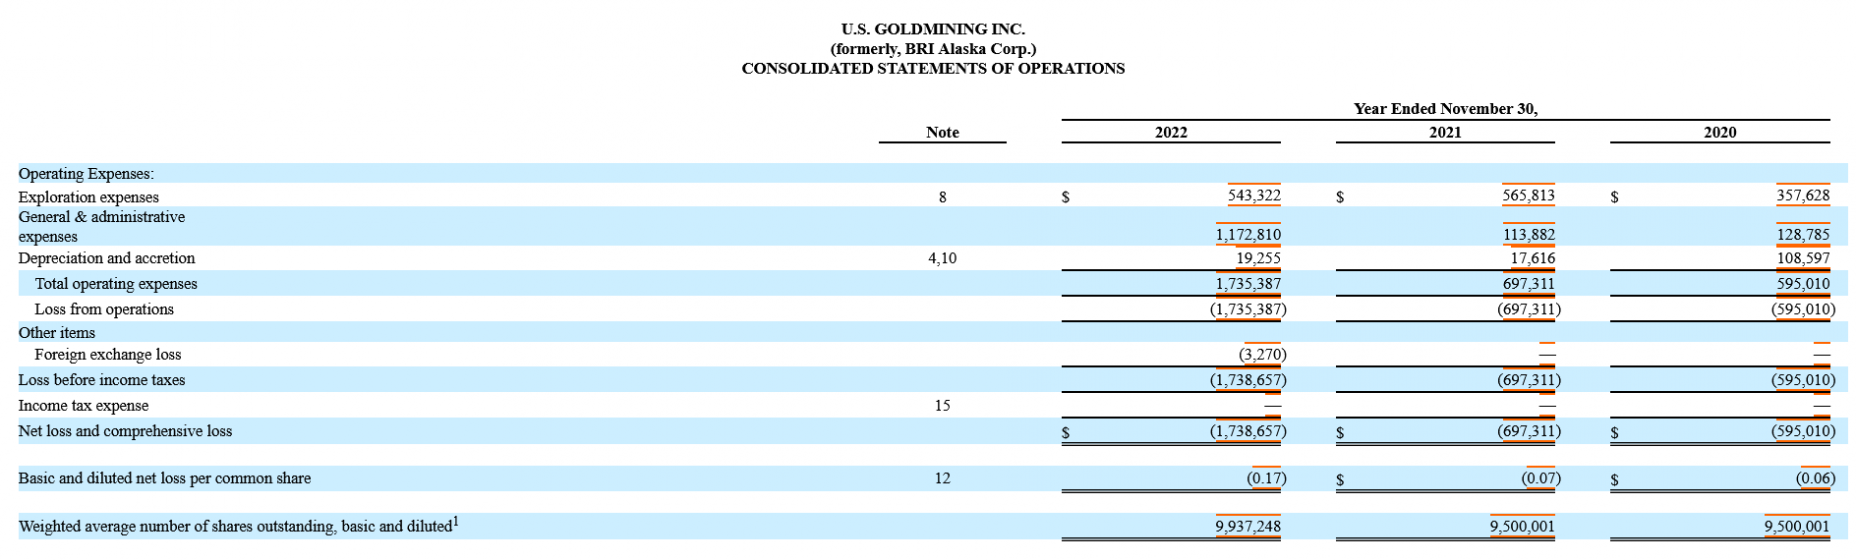 Financial performance of U.S. GoldMining Inc.